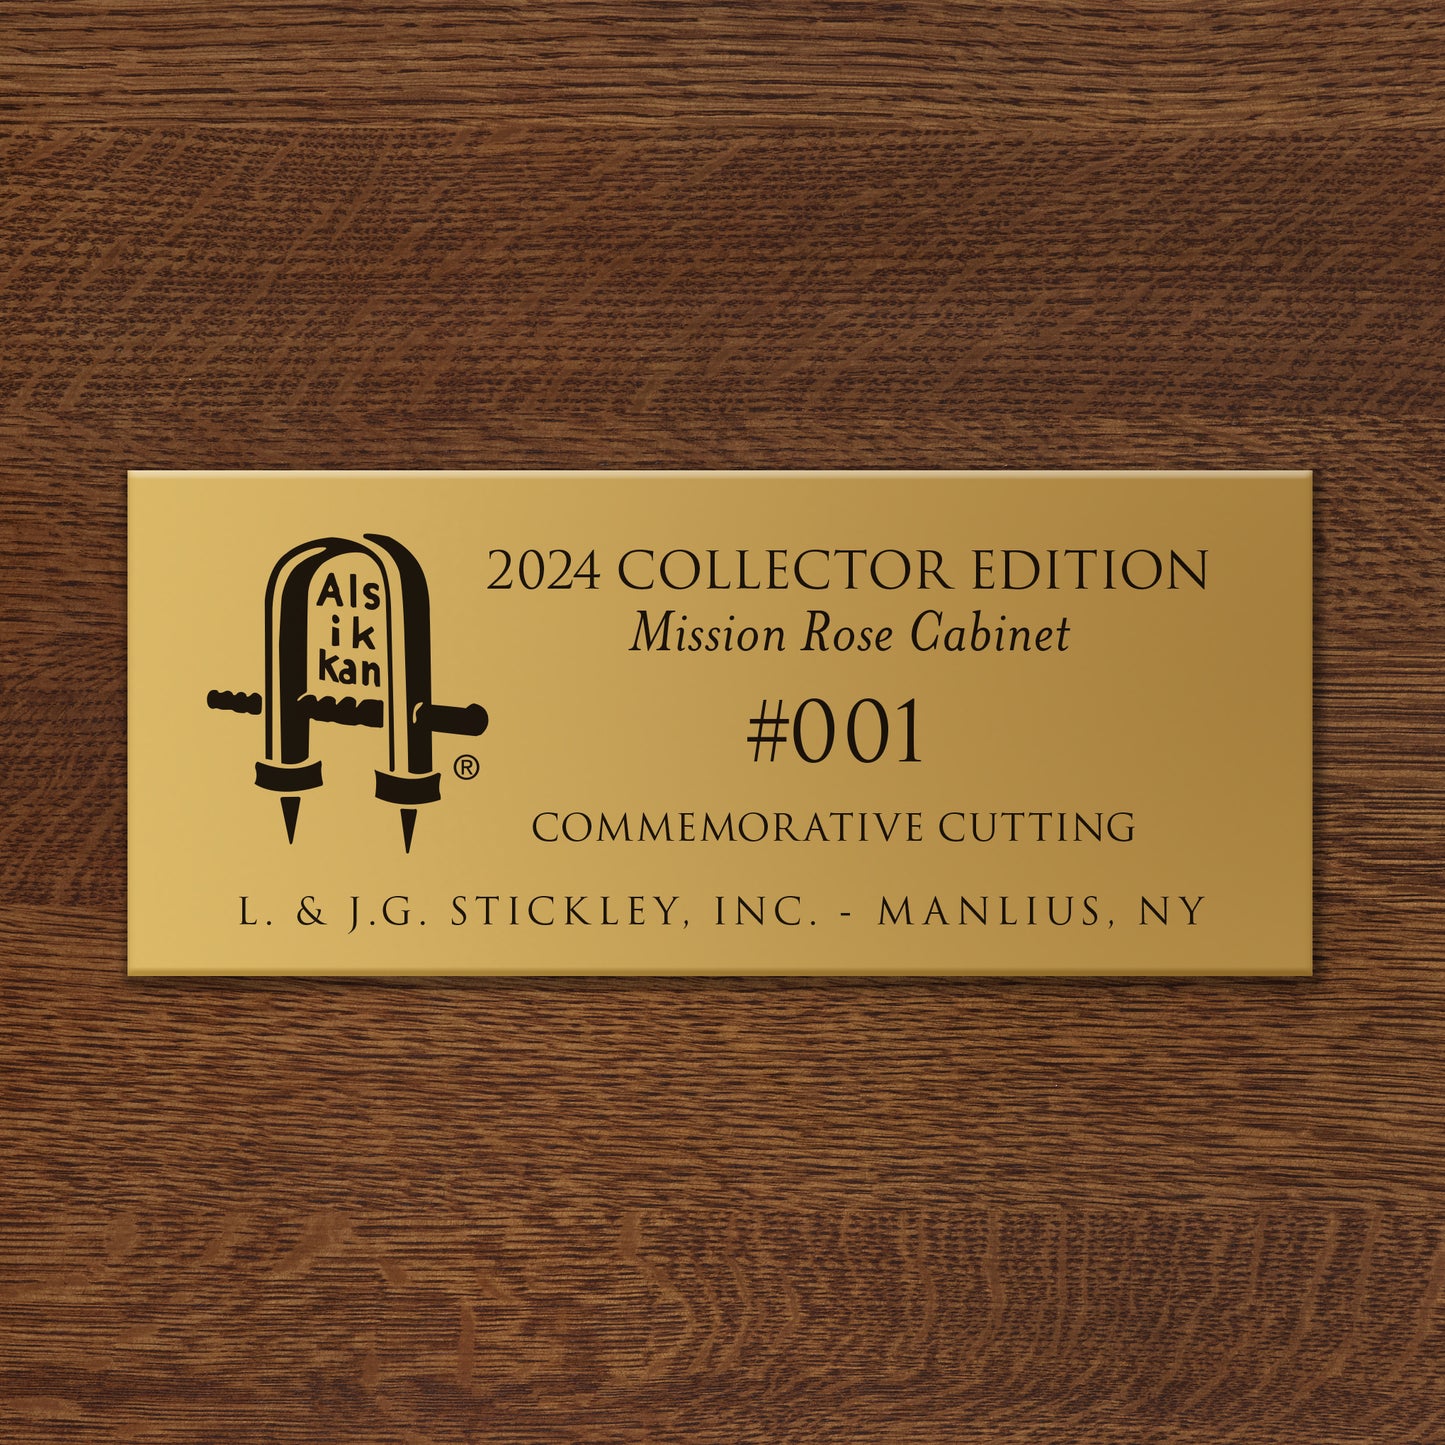 2024 Collector Edition Pre-Order Access